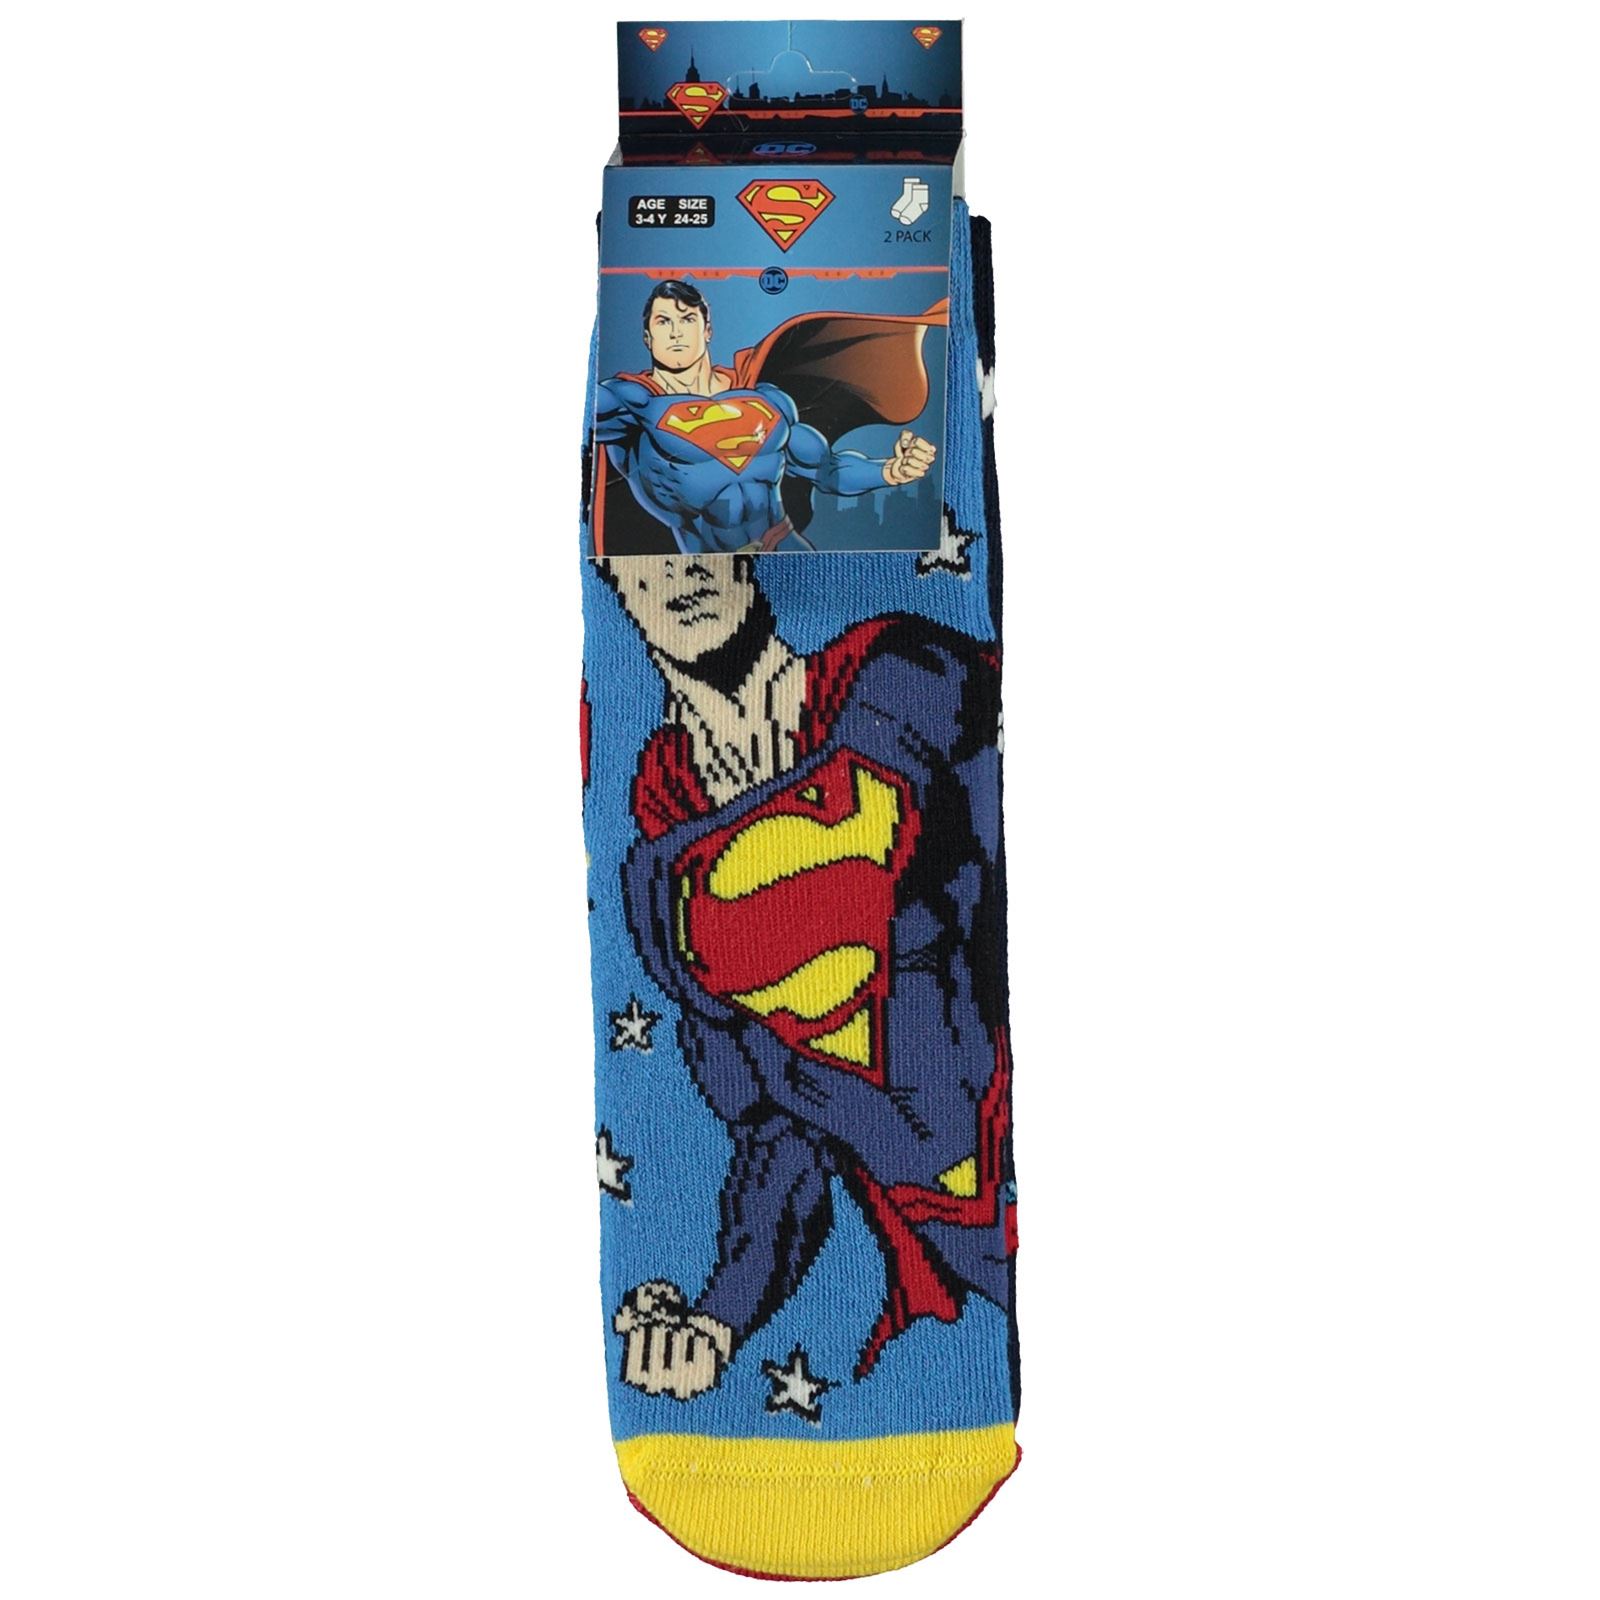 Süperman Erkek Çocuk 2'li Çorap Set 3-11 Yaş Mavi